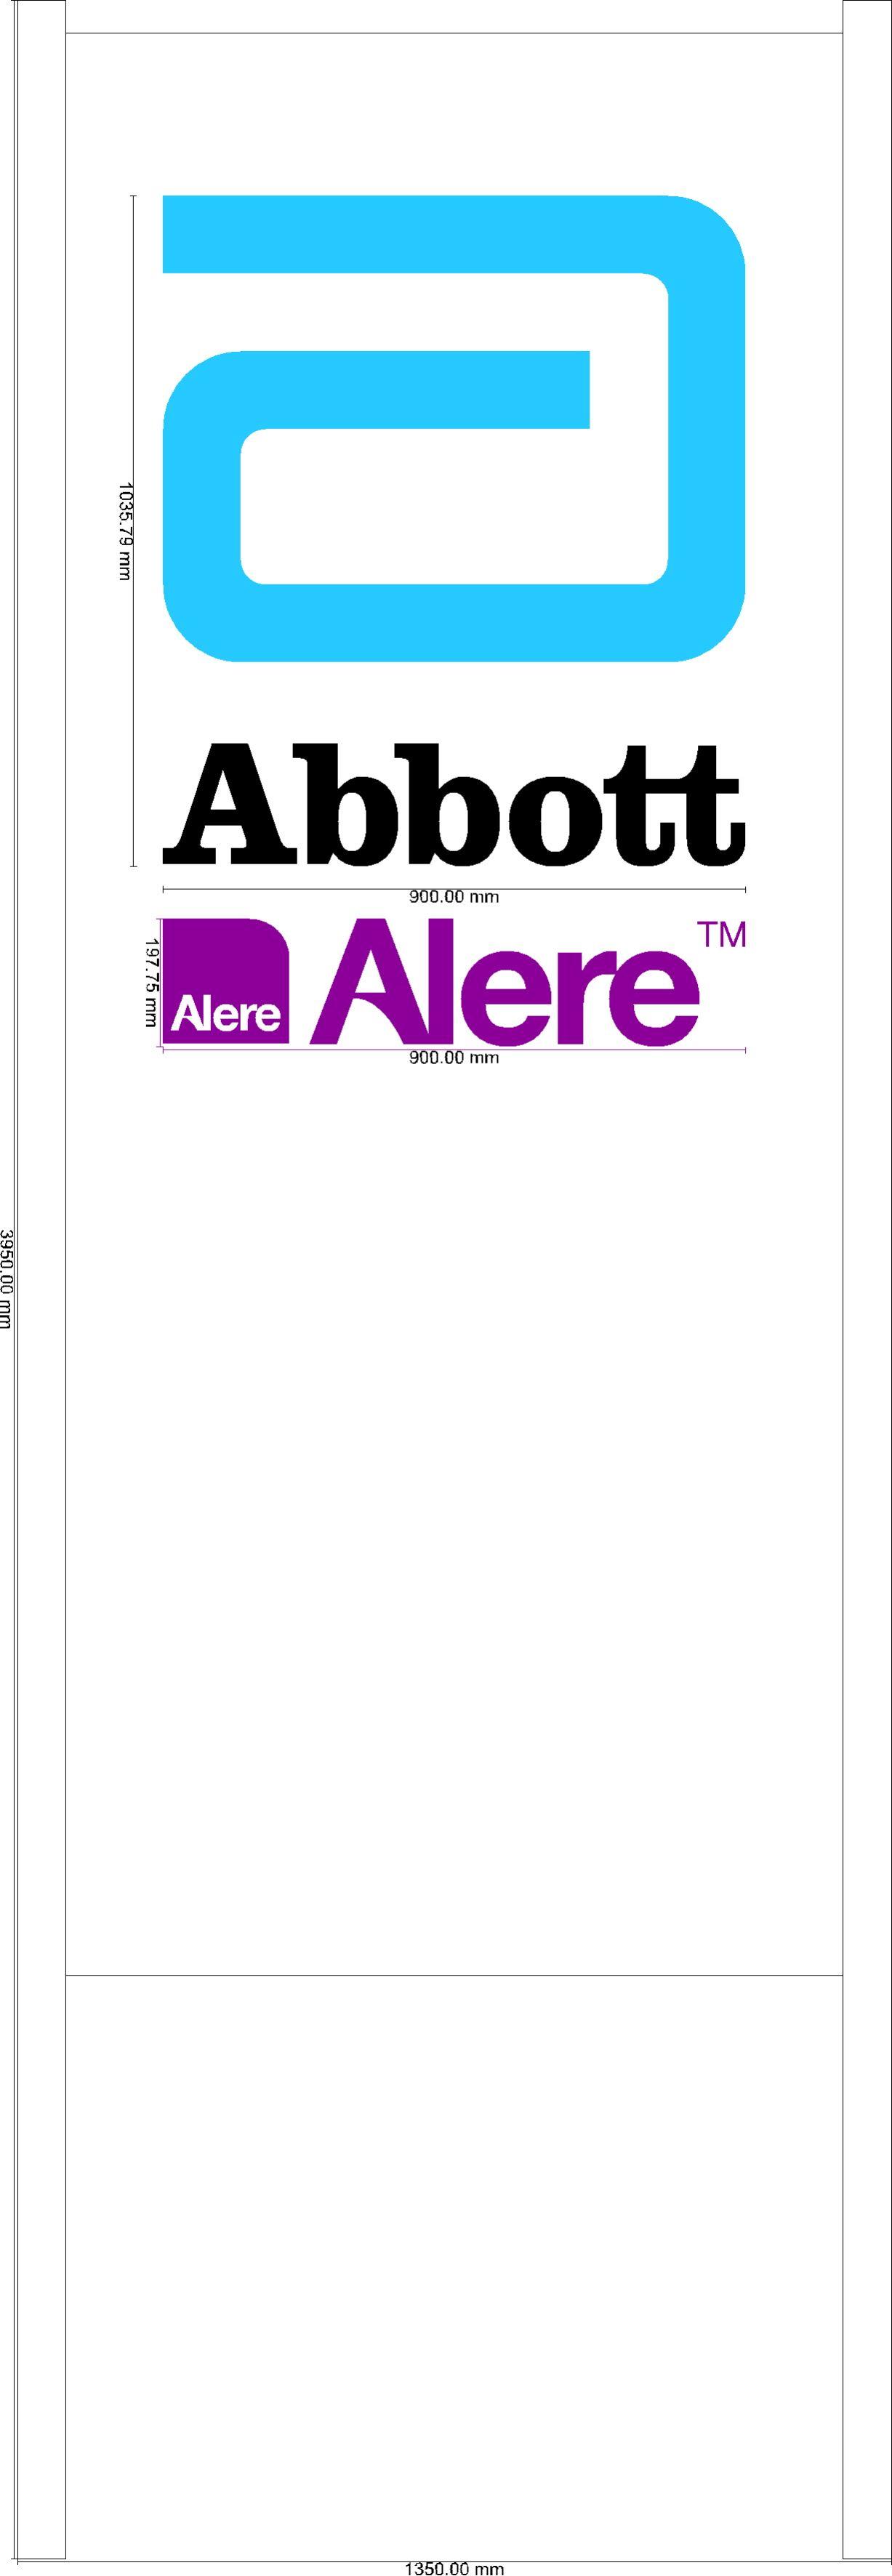 Alere Logo - A Customers